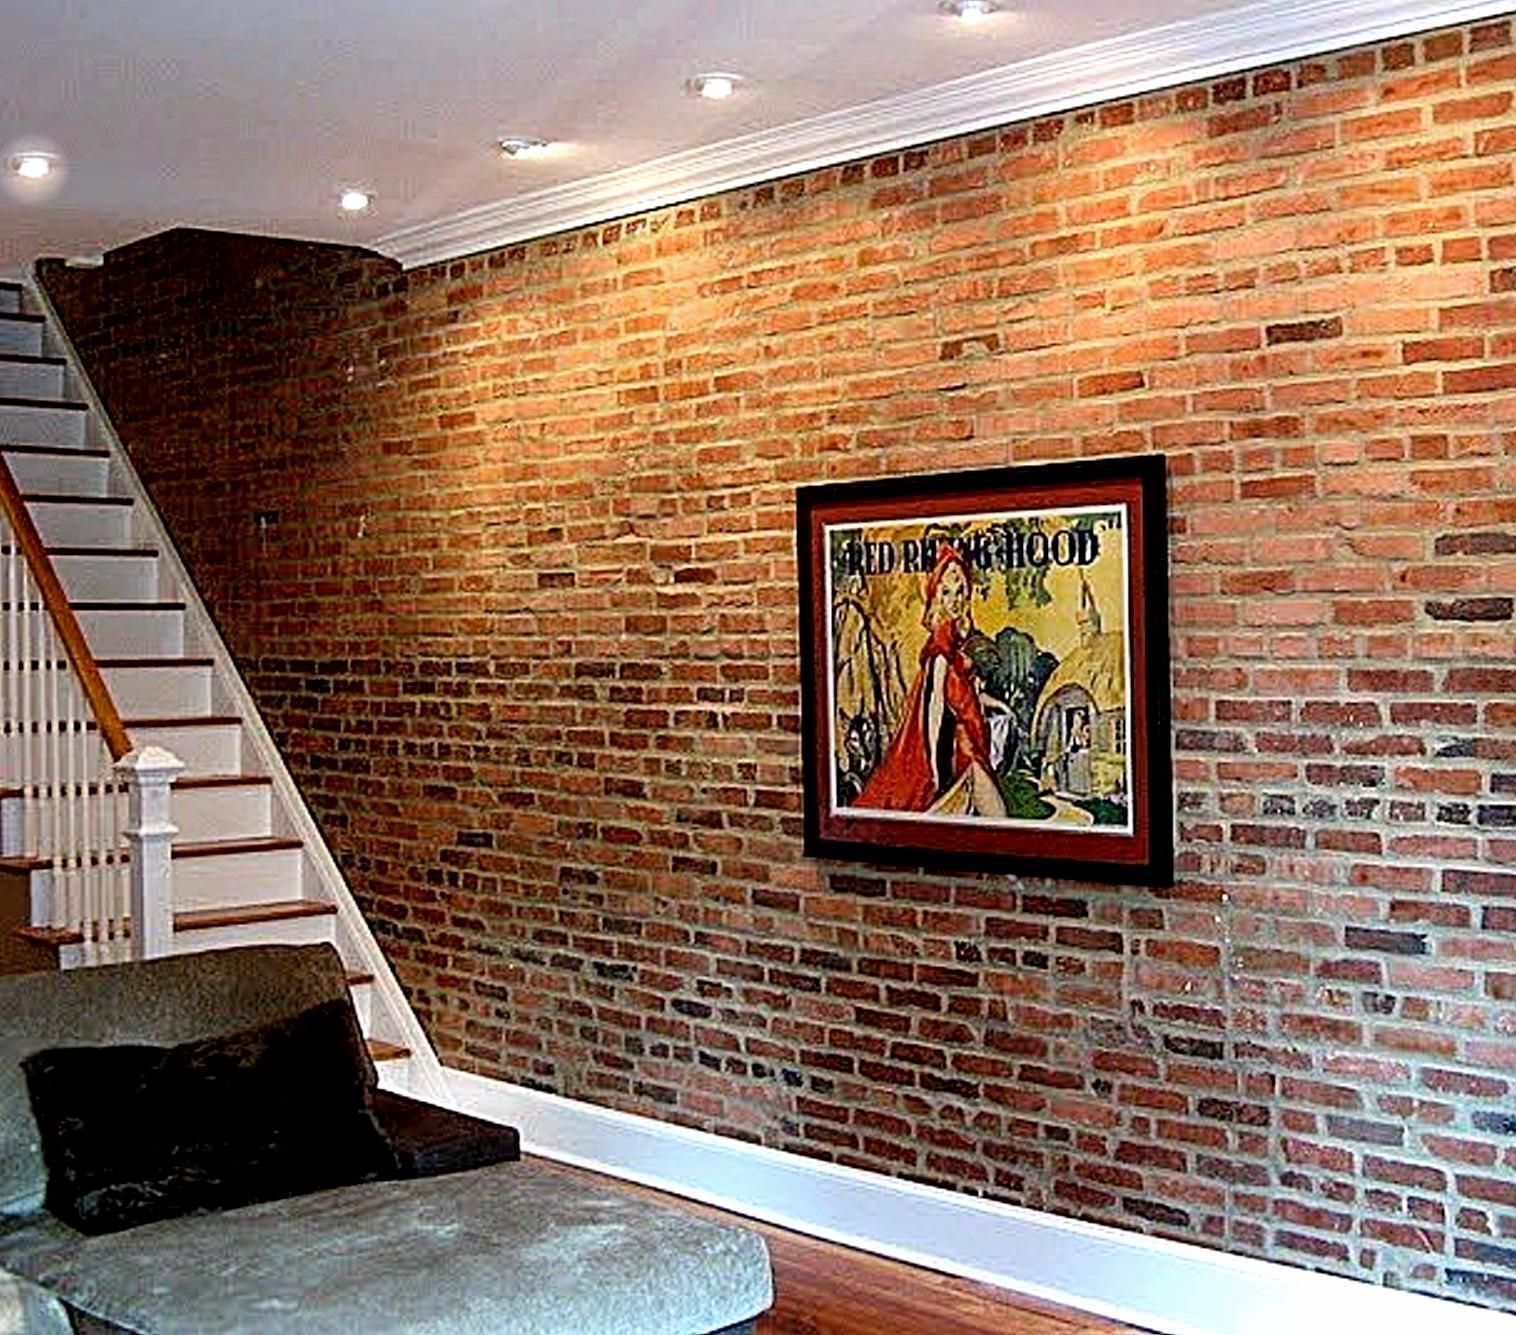 Brick Wall Design Ideas